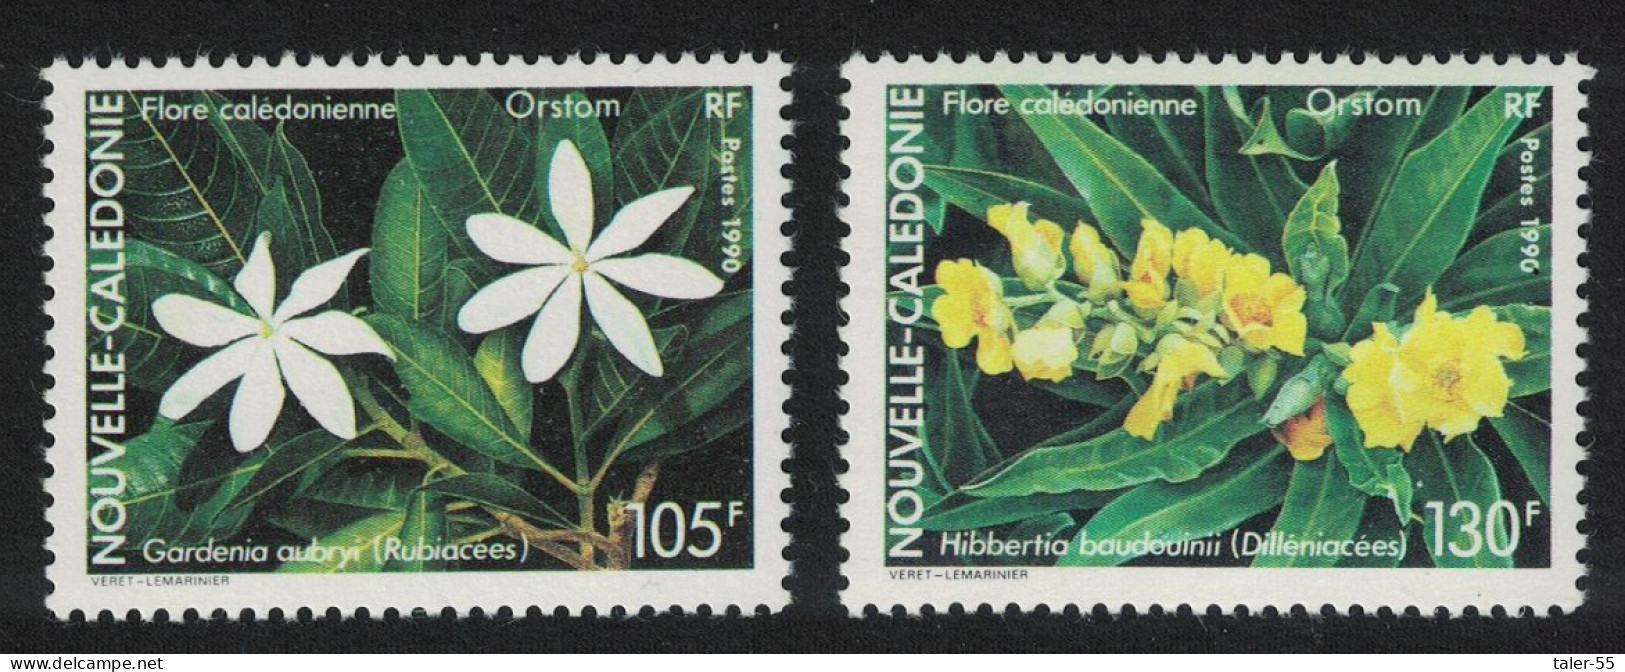 New Caledonia Flowers 2v 1990 MNH SG#903-904 - Nuovi